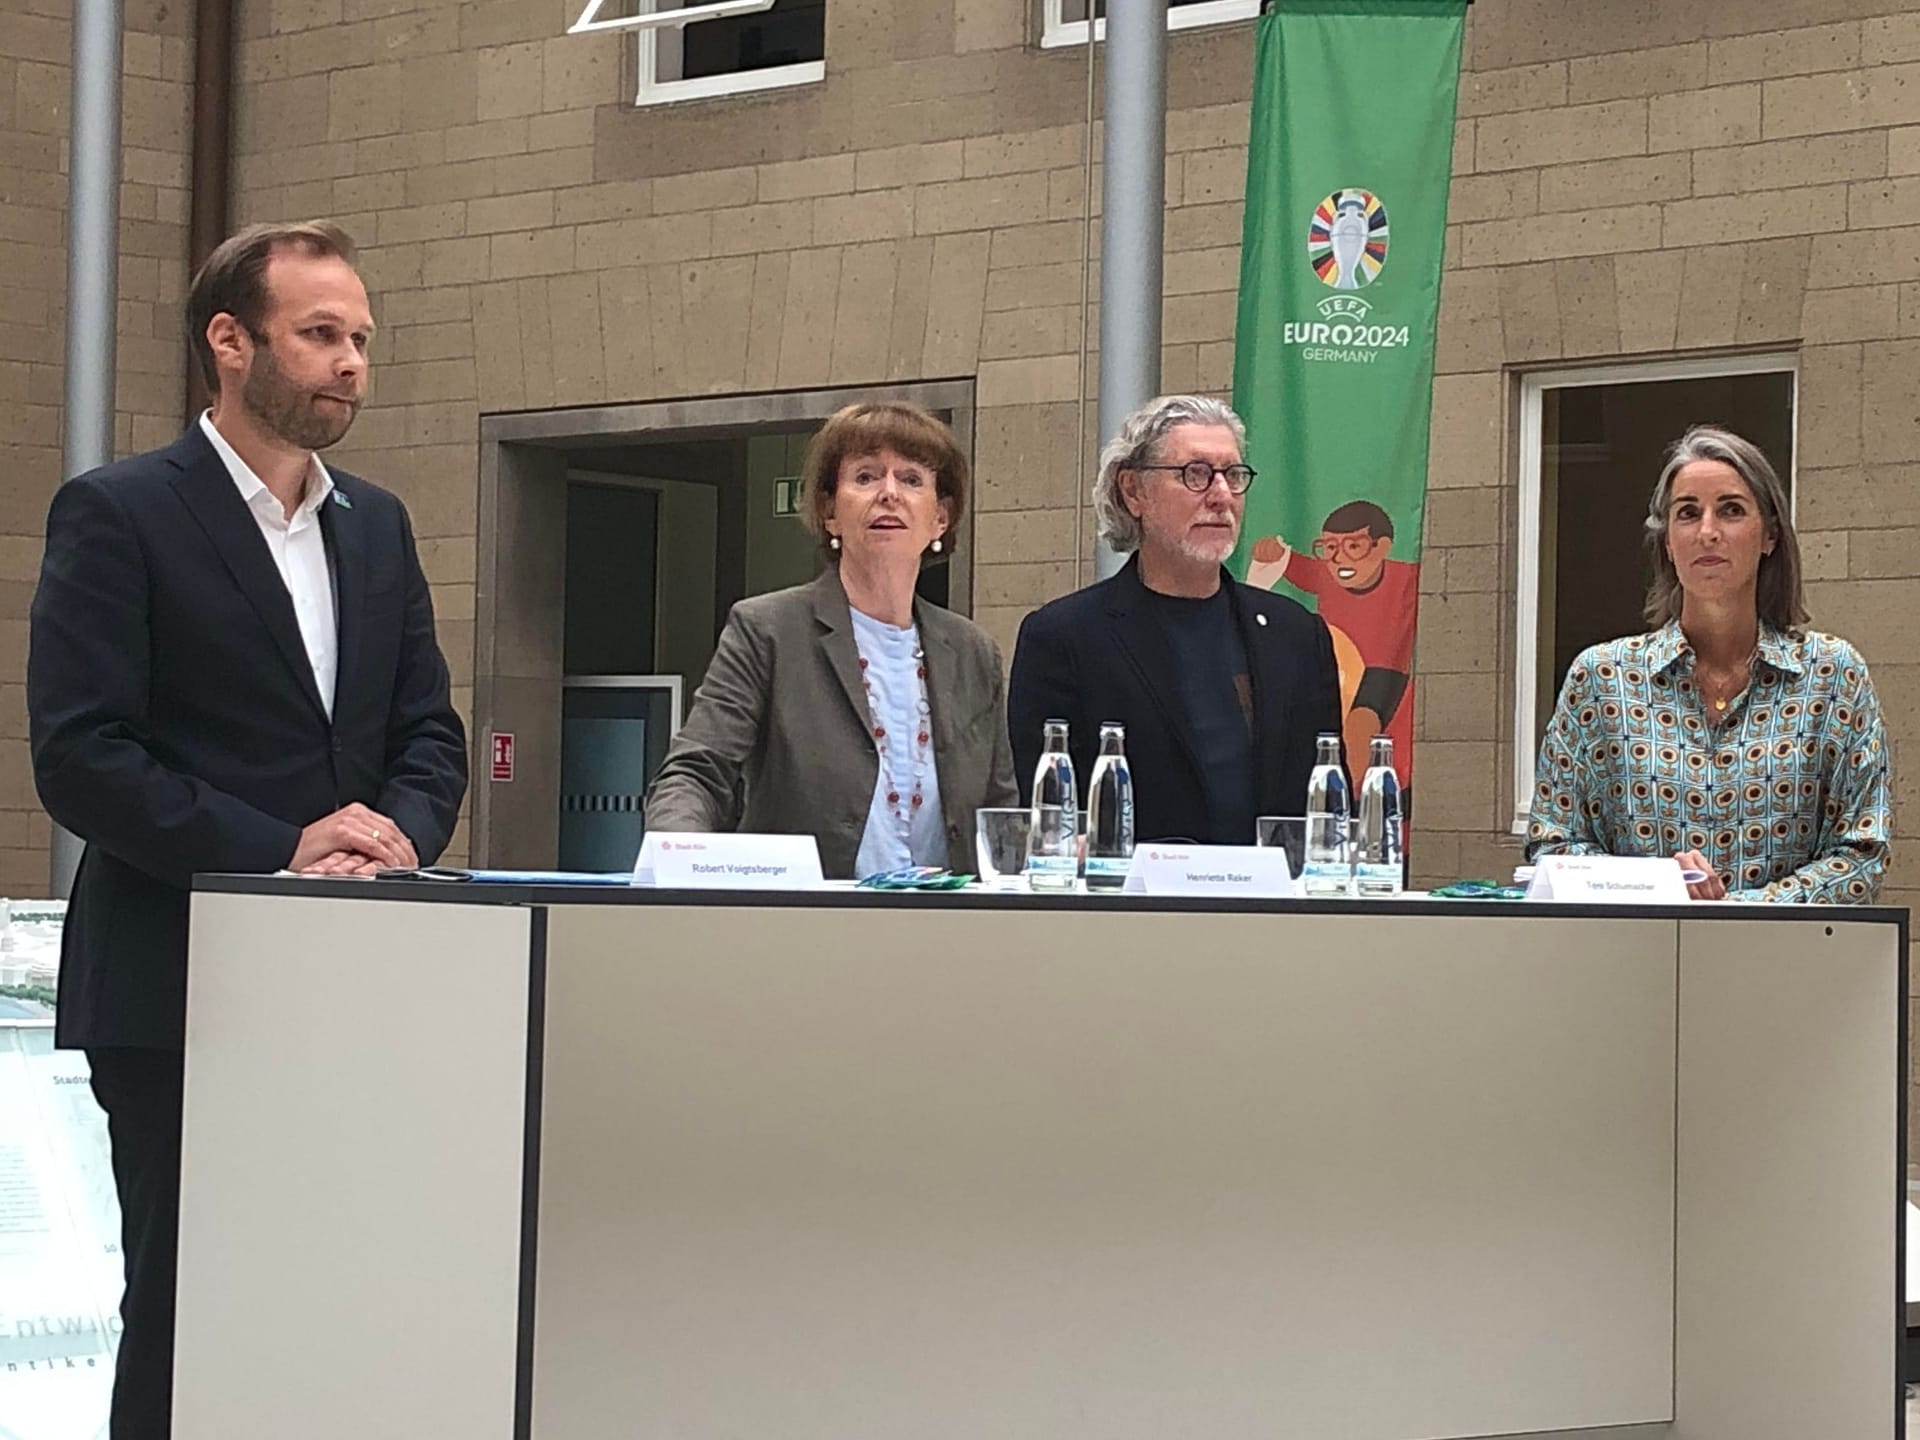 Mit der EM zufrieden: Robert Voigtsberger, Henriette Reker, EM-Botschafter Toni Schumacher und Pressesprecherin Simone Winkelhog (v. l.).